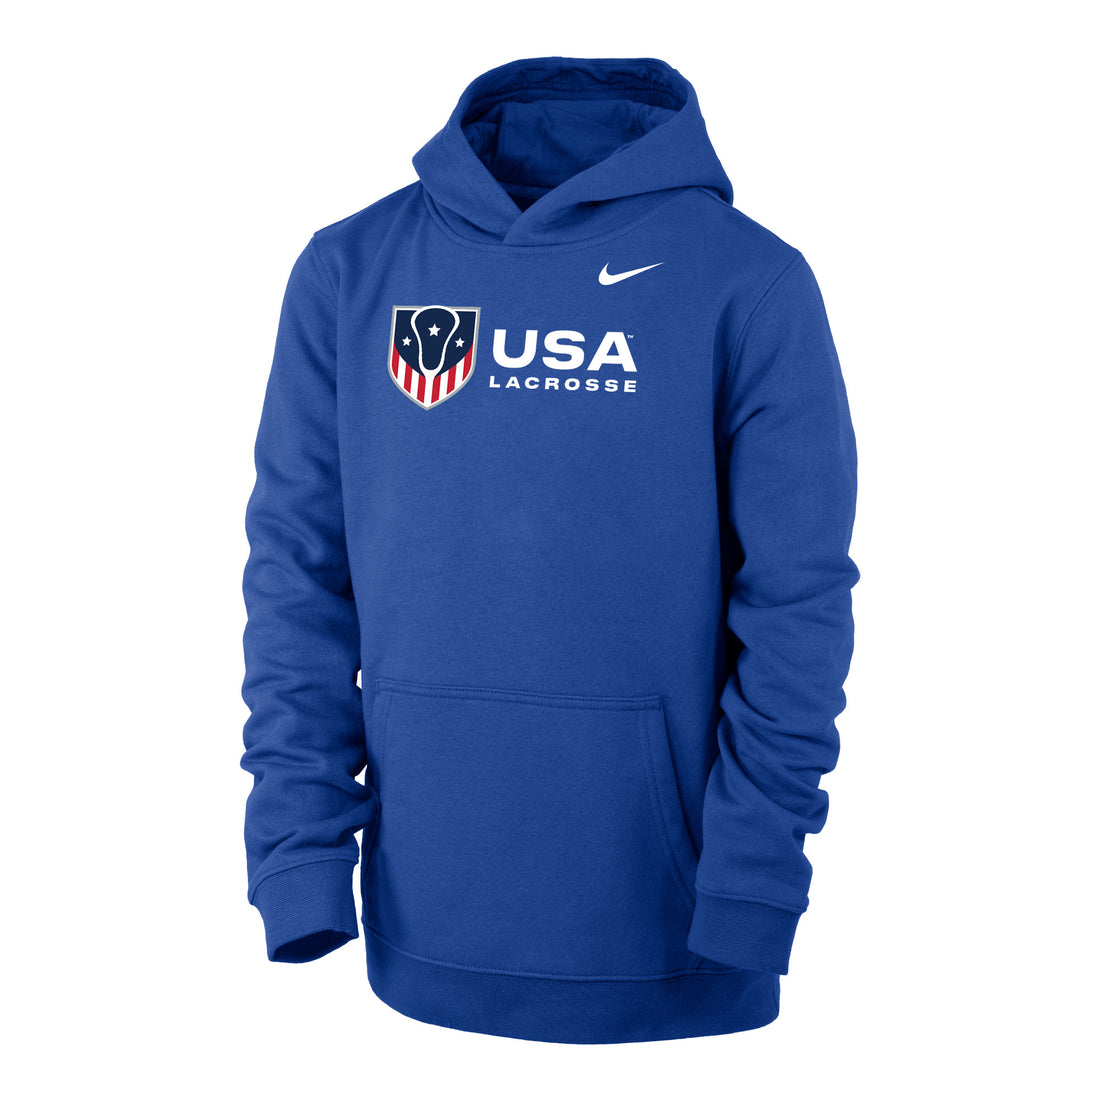 Youth USA Lacrosse Nike Club Fleece Pullover Hoodie